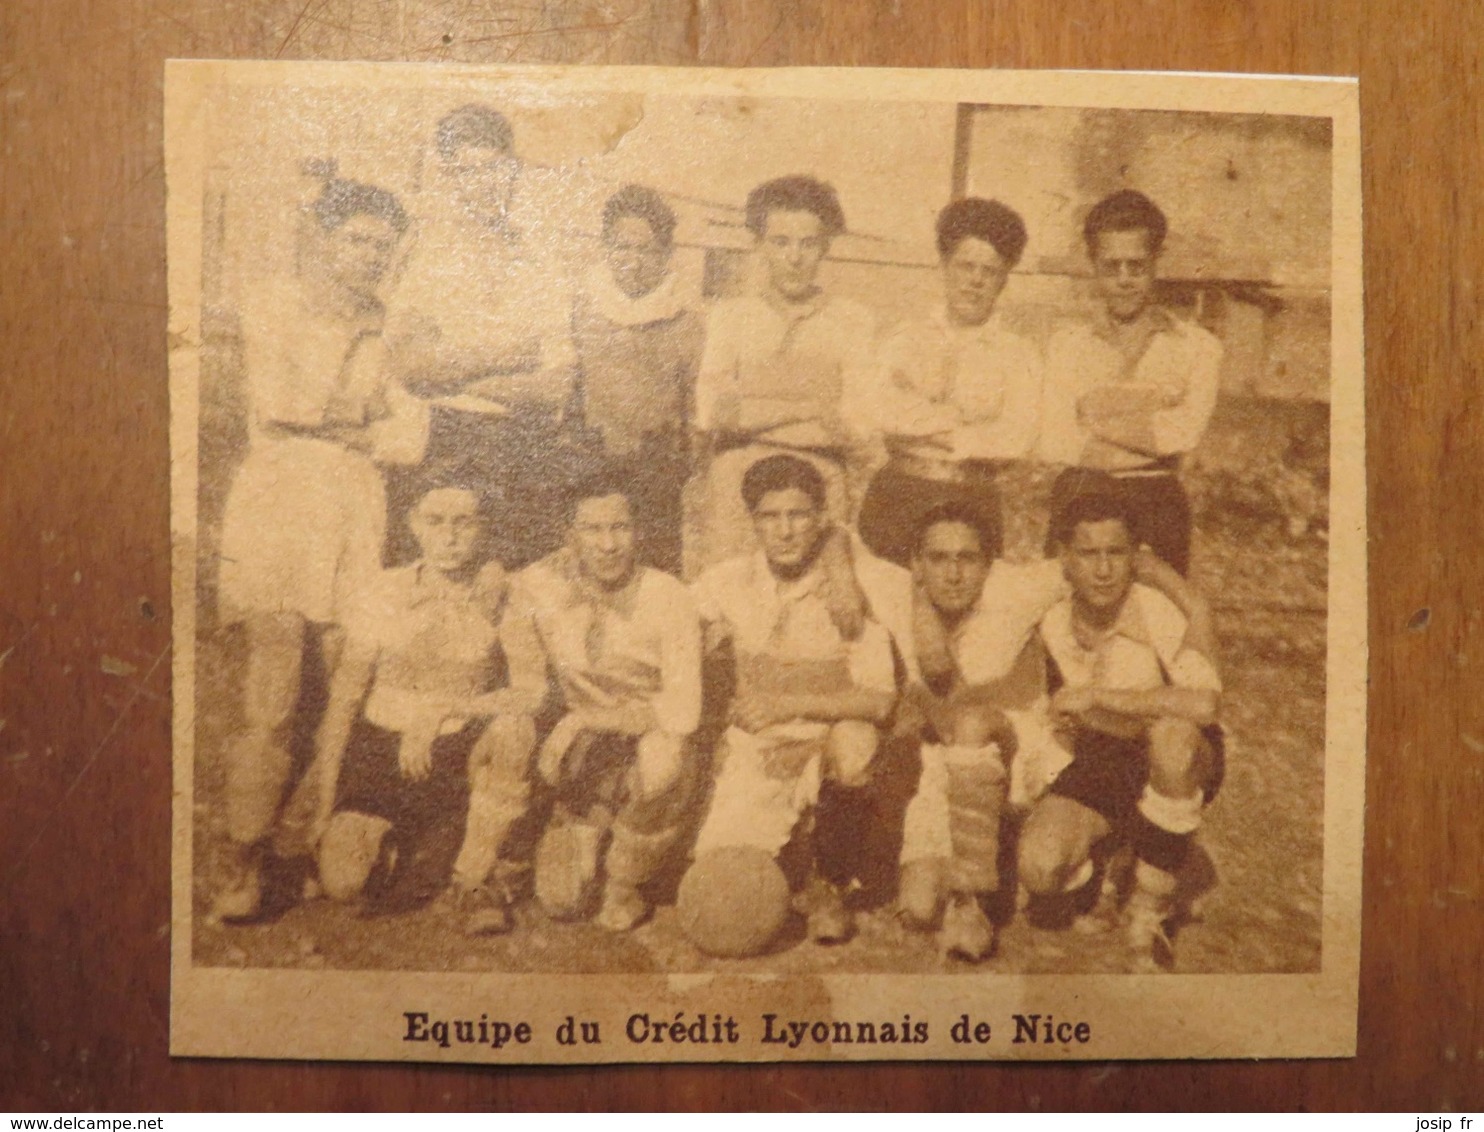 NICE (ALPES-MARITIMES)- EQUIPE DU CRÉDIT LYONNAIS DE NICE FOOTBALL (PHOTO DE JOURNAL: 04/1931) - Côte D'Azur